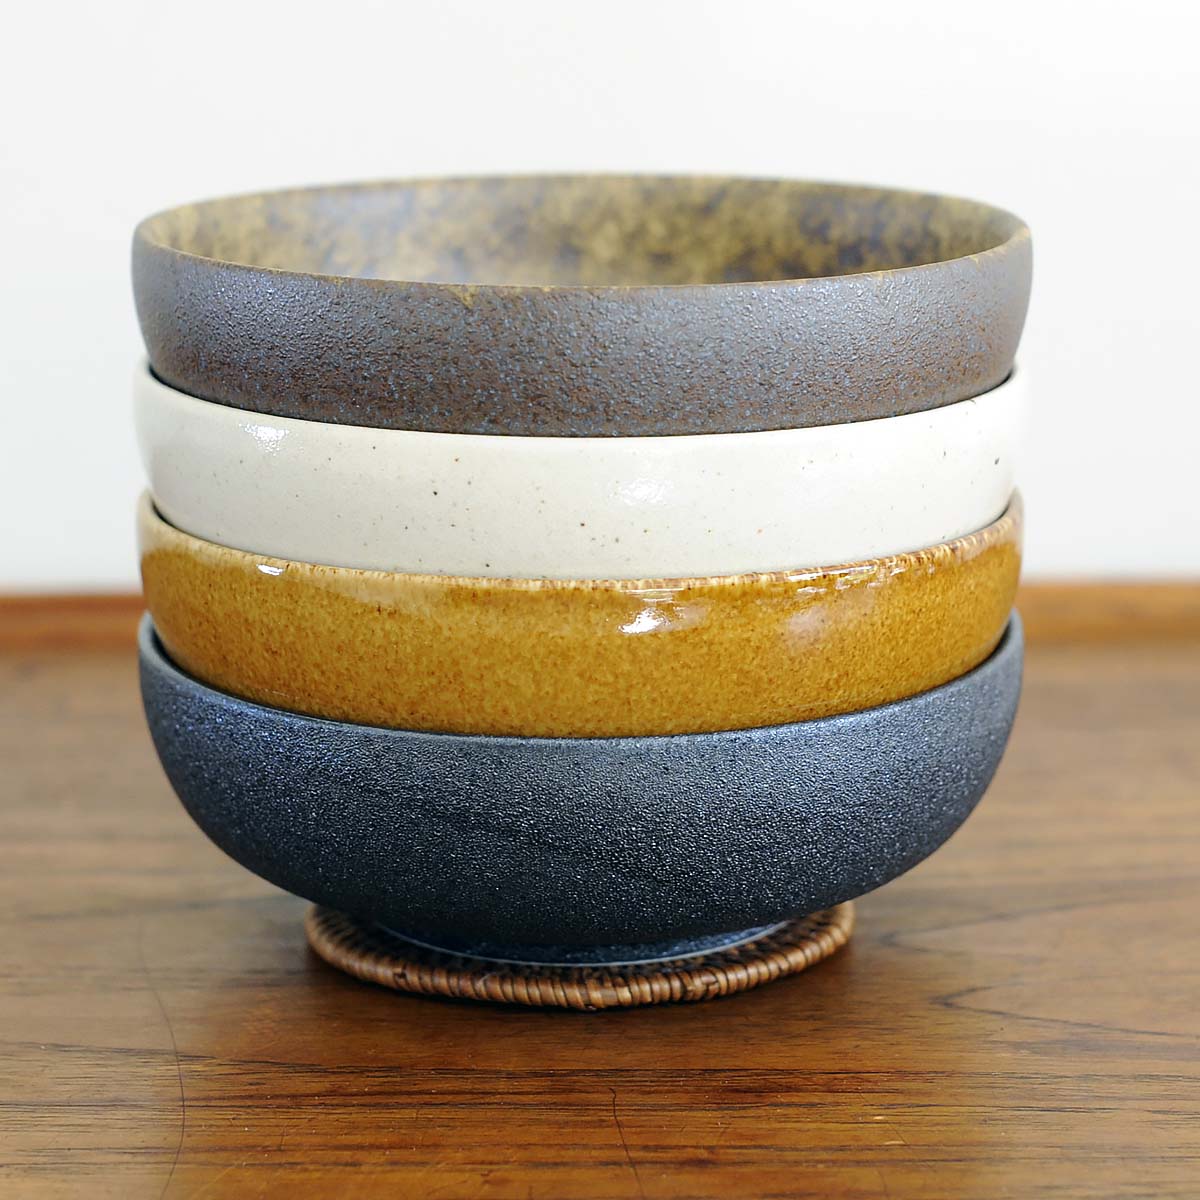 Kuriēto Round Ginrin Ceramic Cat Bowl, In Large Size, & Blue | at Made Moggie